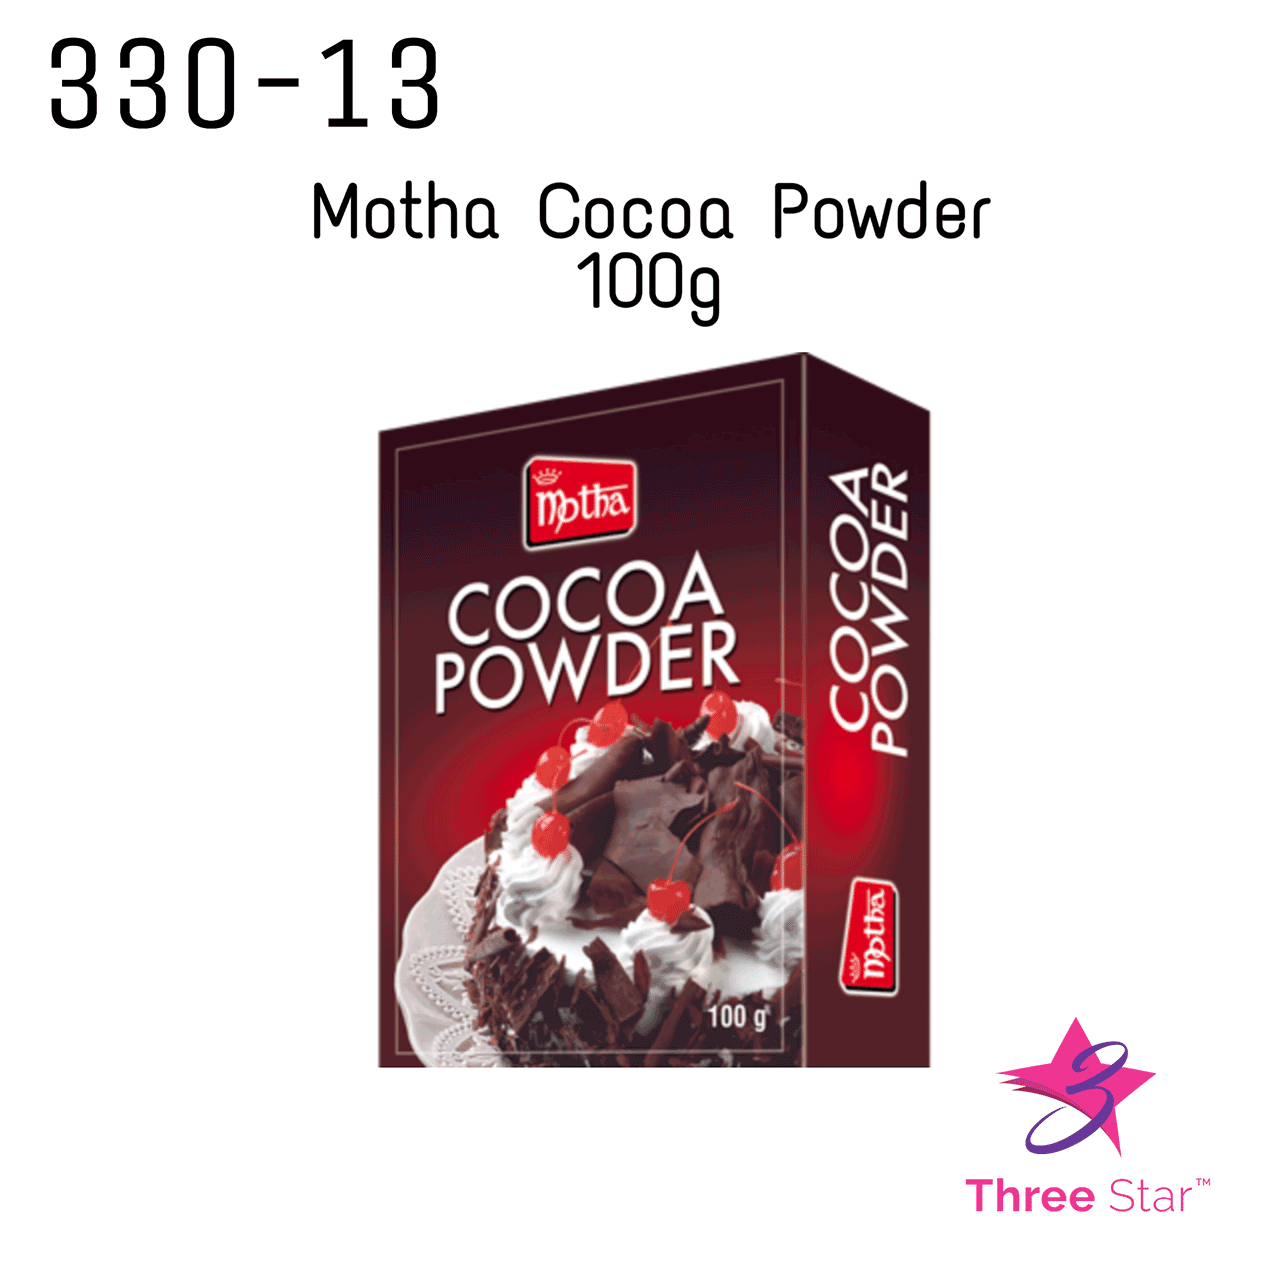 Motha Cocoa Powder